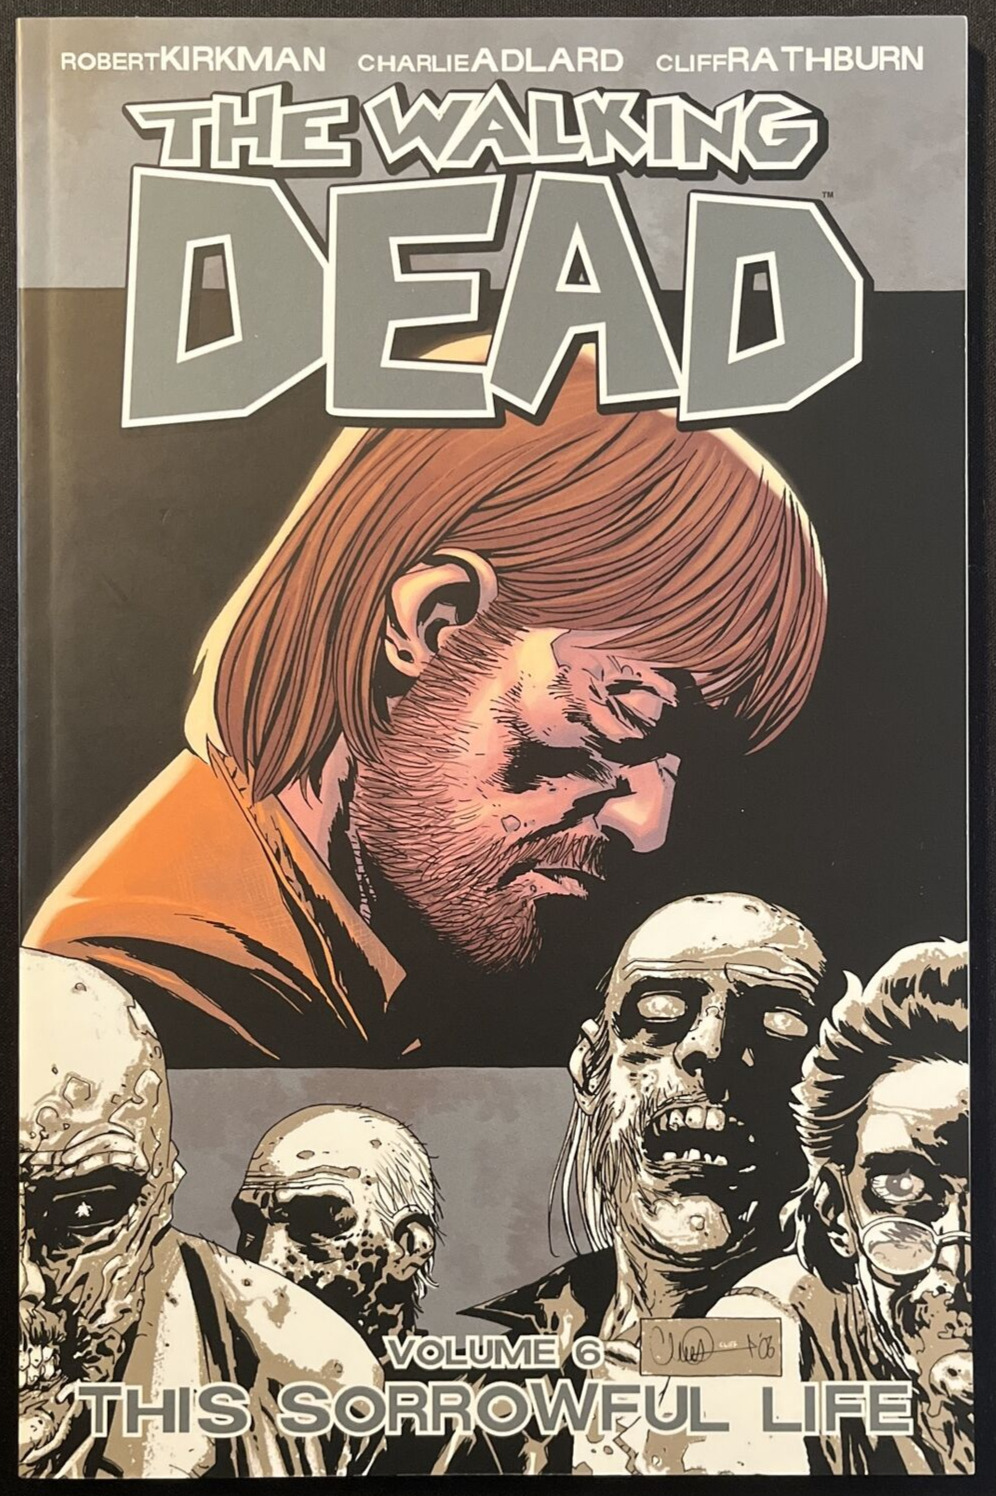 The Walking Dead Vol. 6: This Sorrowful Life - Image Comics 2007